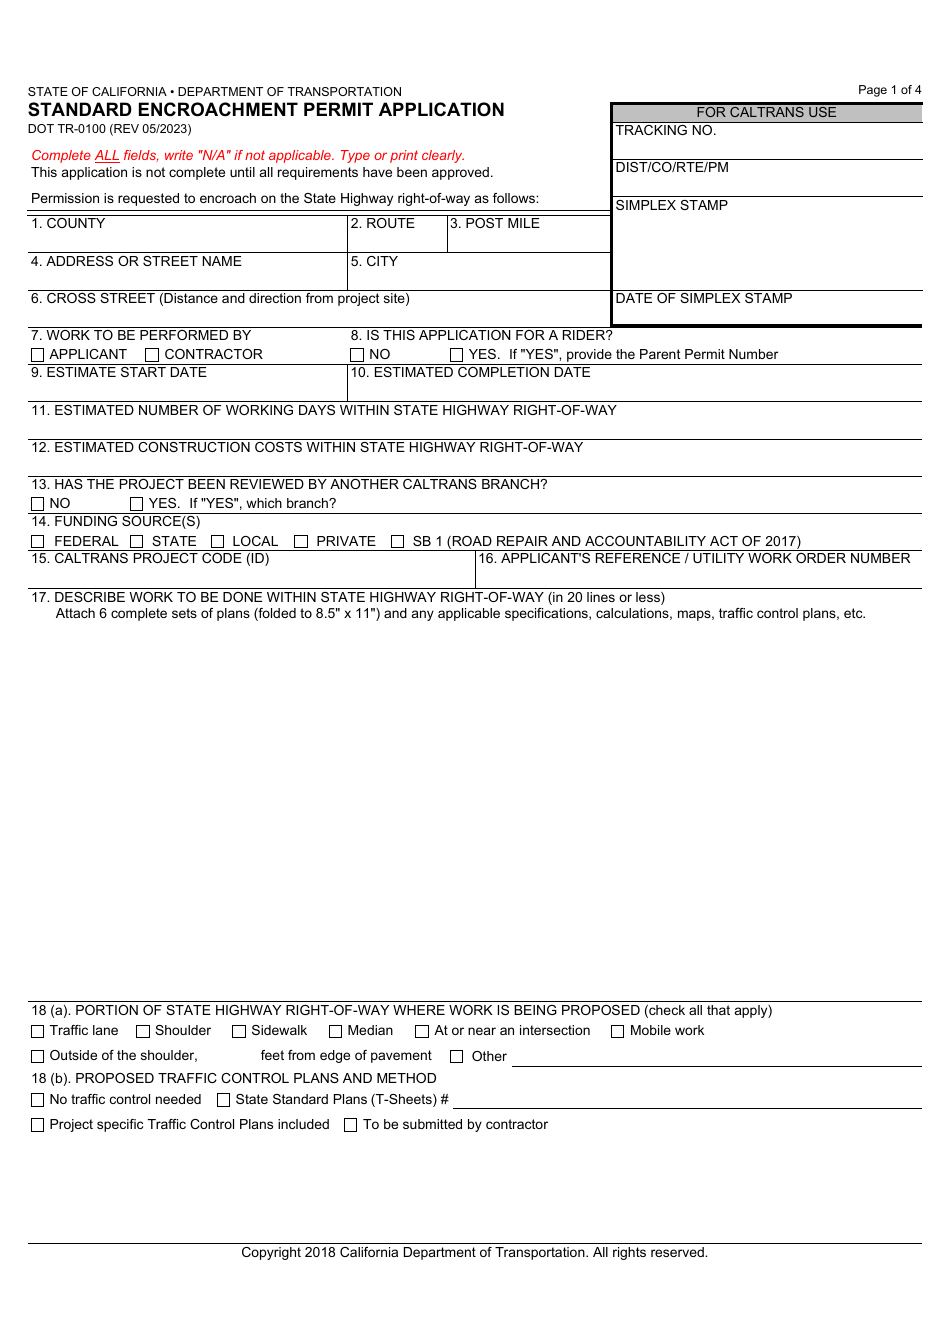 Form DOT TR-0100 Standard Encroachment Permit Application - California, Page 1